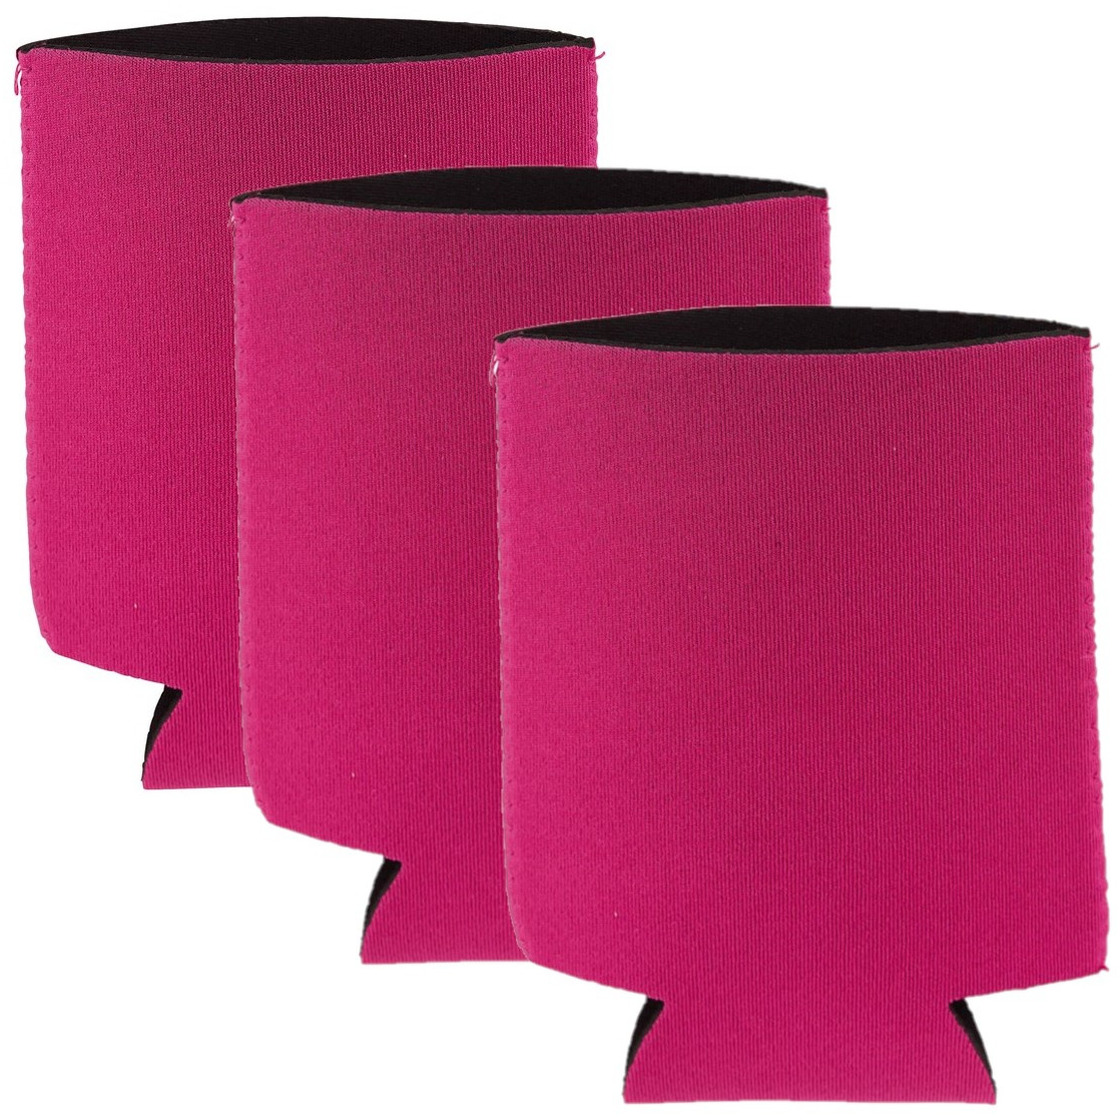 Voordeelset van 20x stuks opvouwbare blikjeskoelers- koel hoesjes fuchsia roze